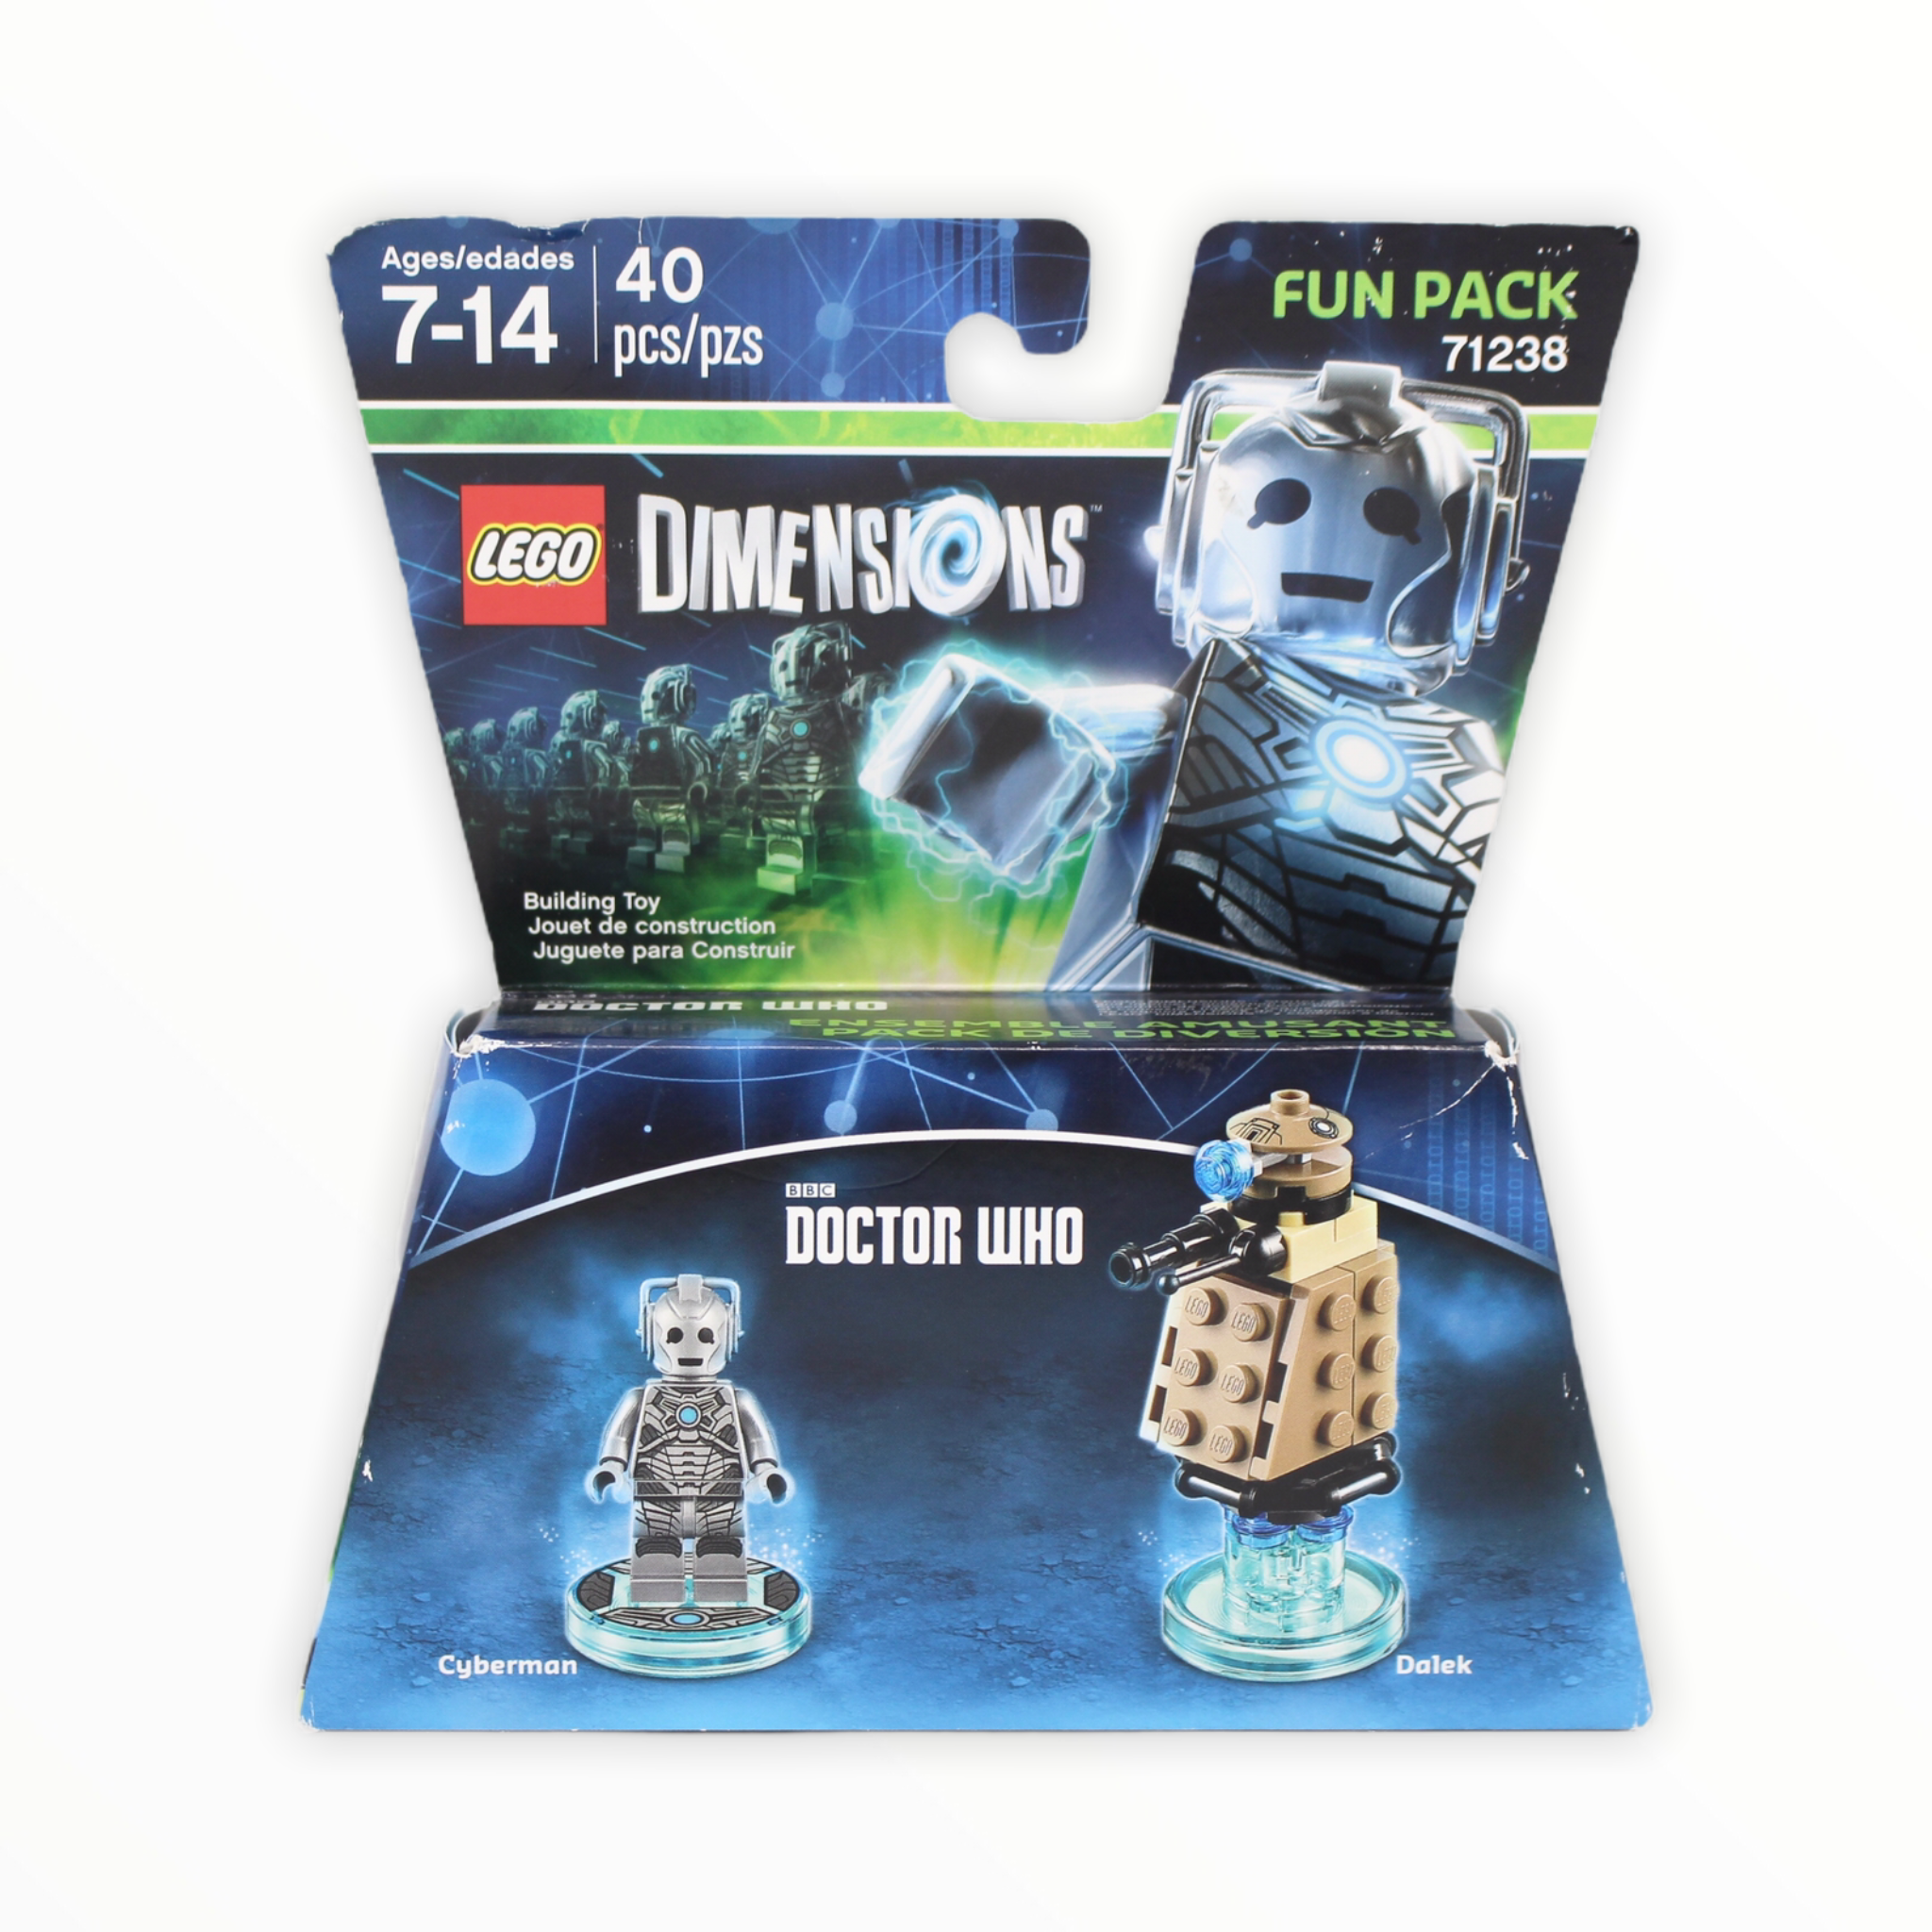 Retired Set 71238 Dimensions Fun Pack - Doctor Who (Cyberman and Dalek)